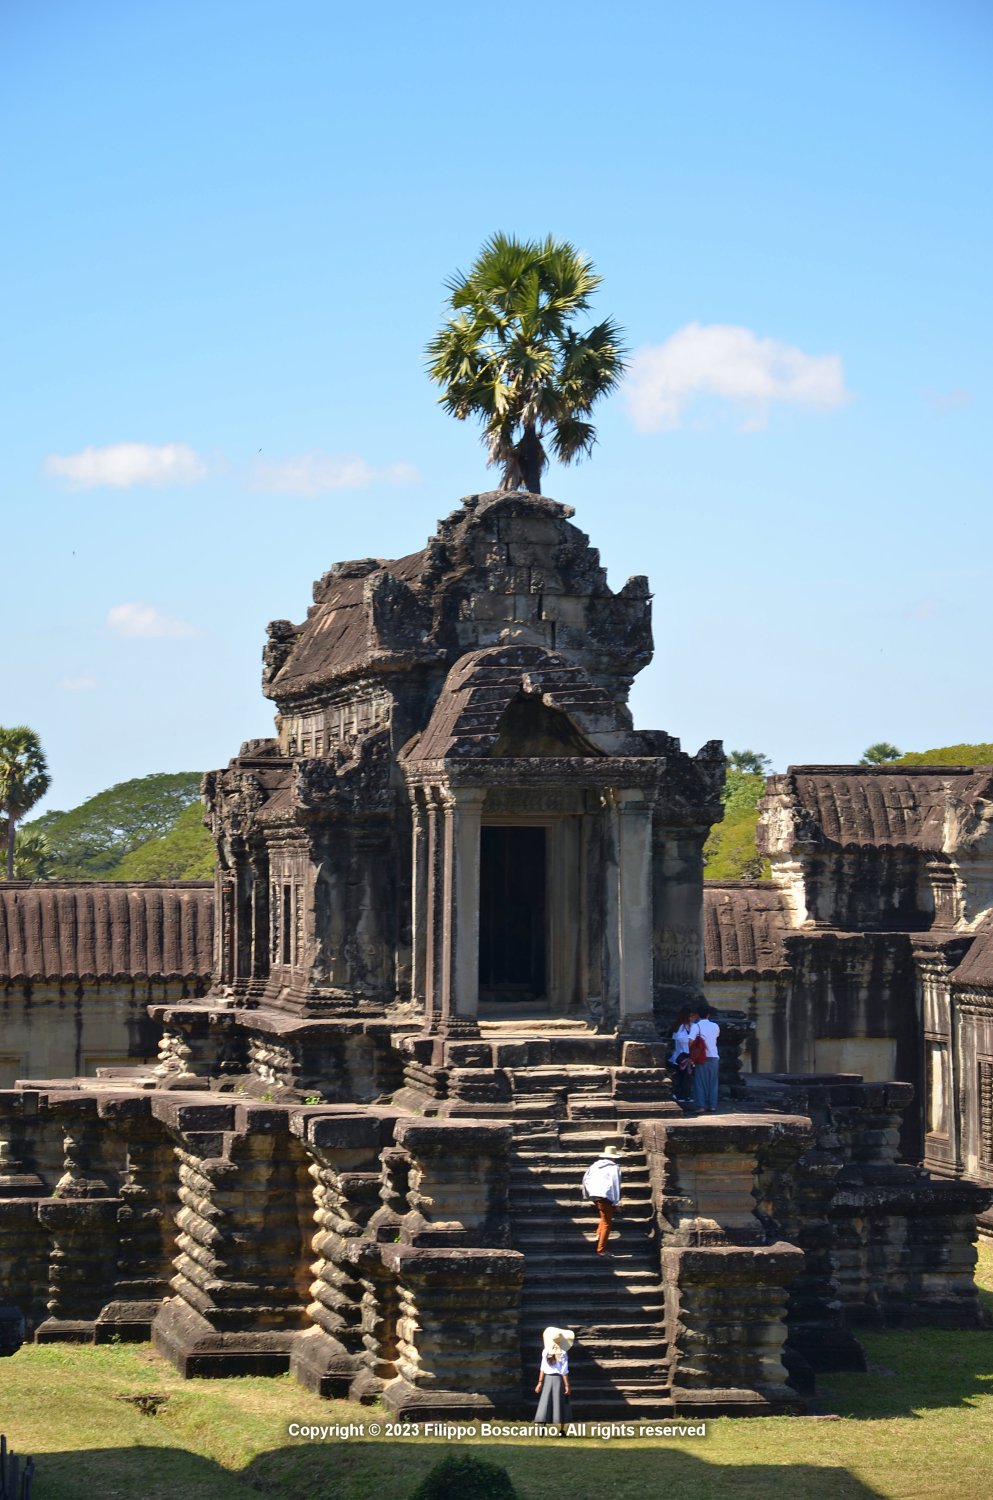 2017-01-01-siem-reap-angkor-2970-monuments